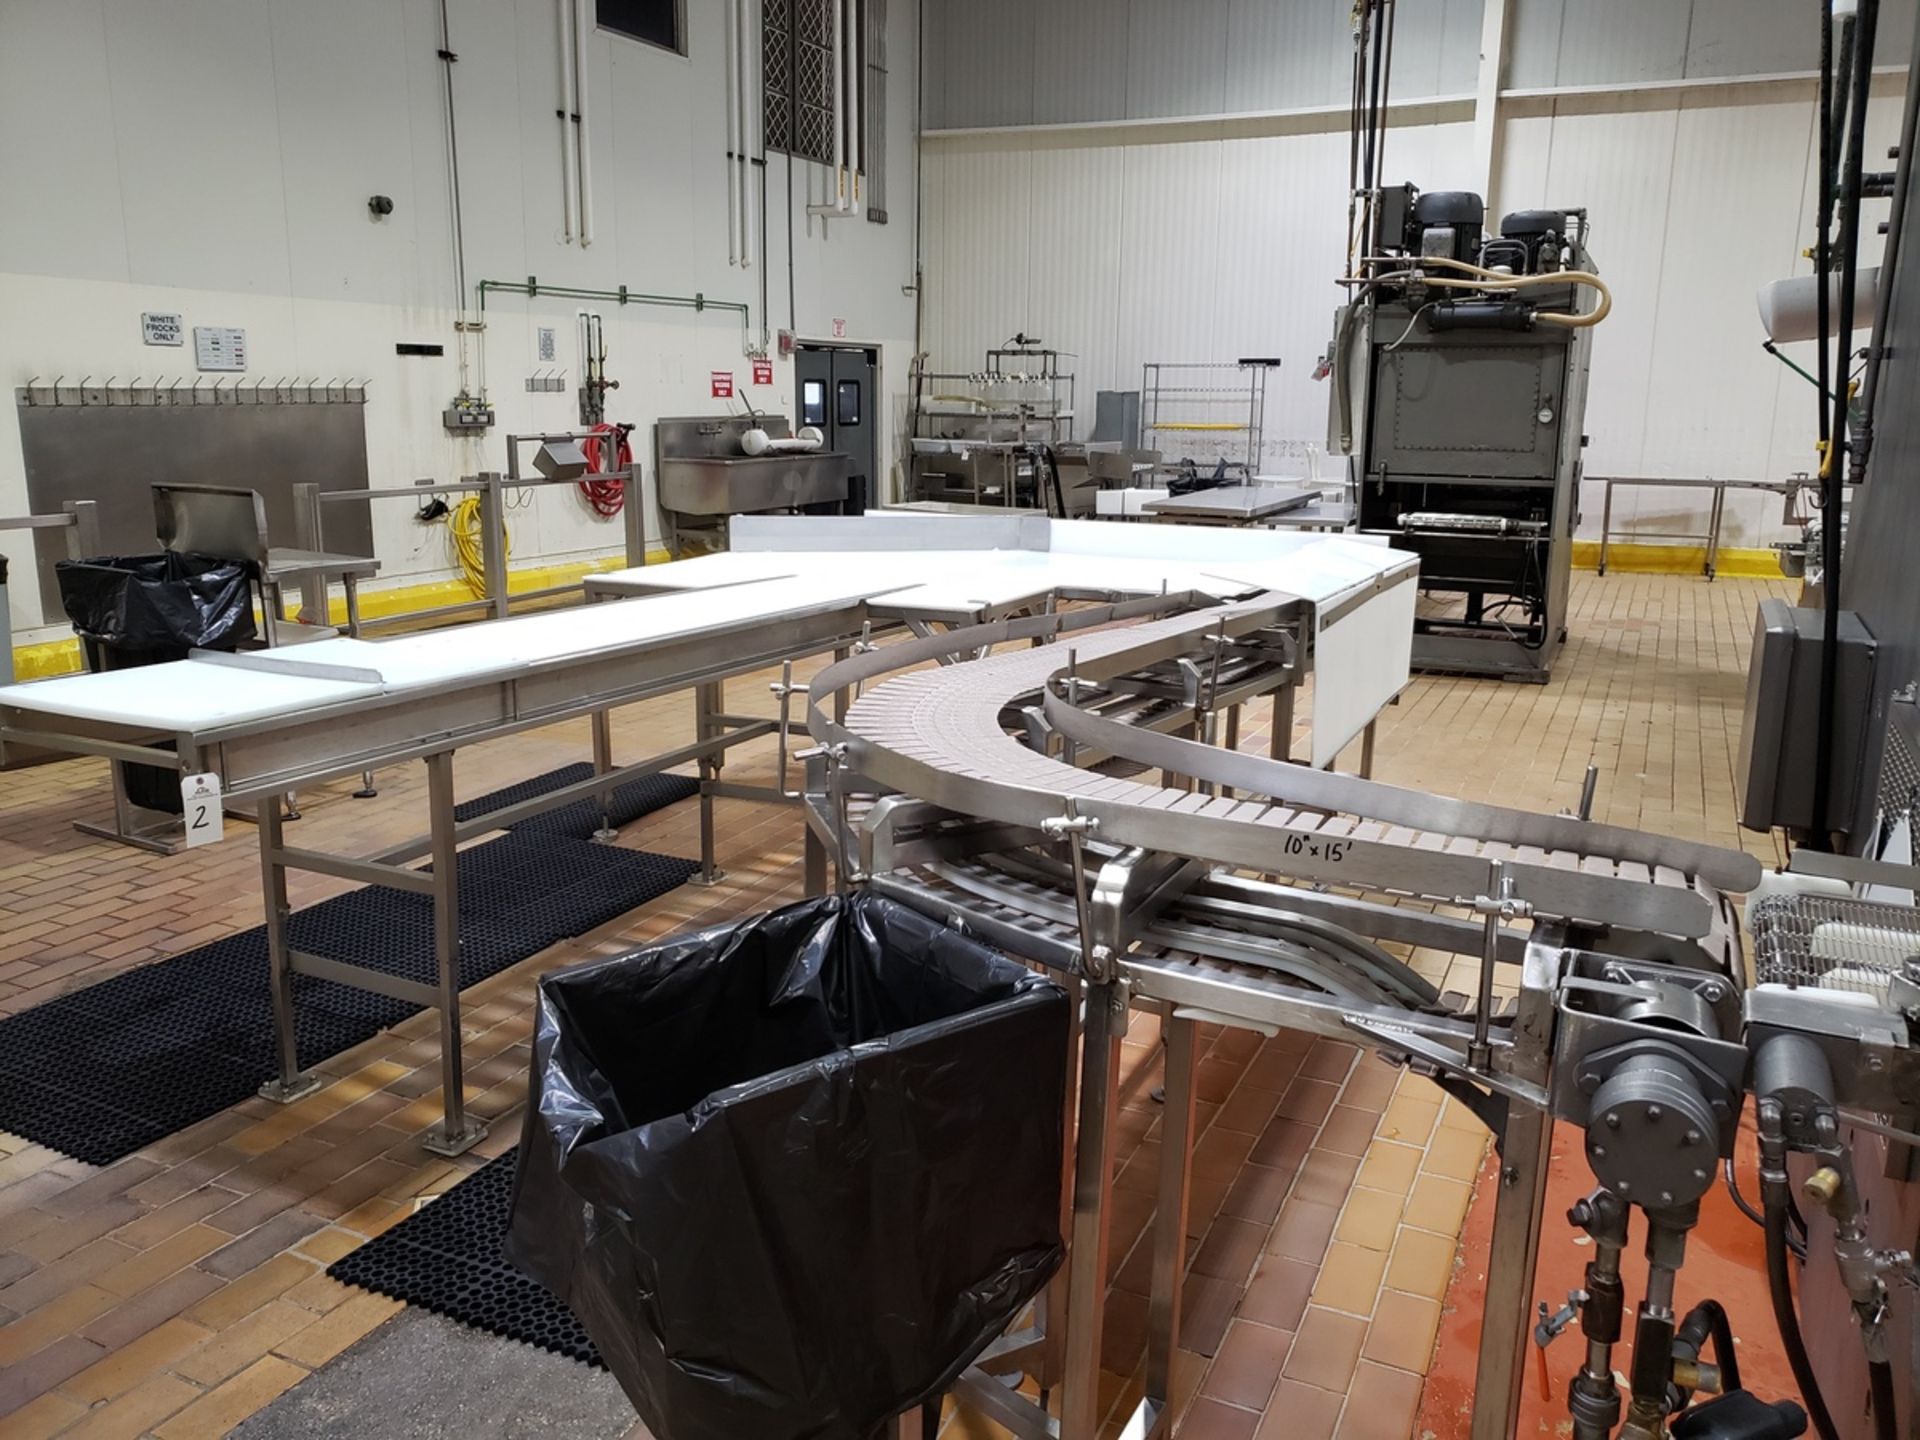 Block Press Infeed Conveyor & Roller Staging Table - Subj to Bulk | Rig Fee: $300